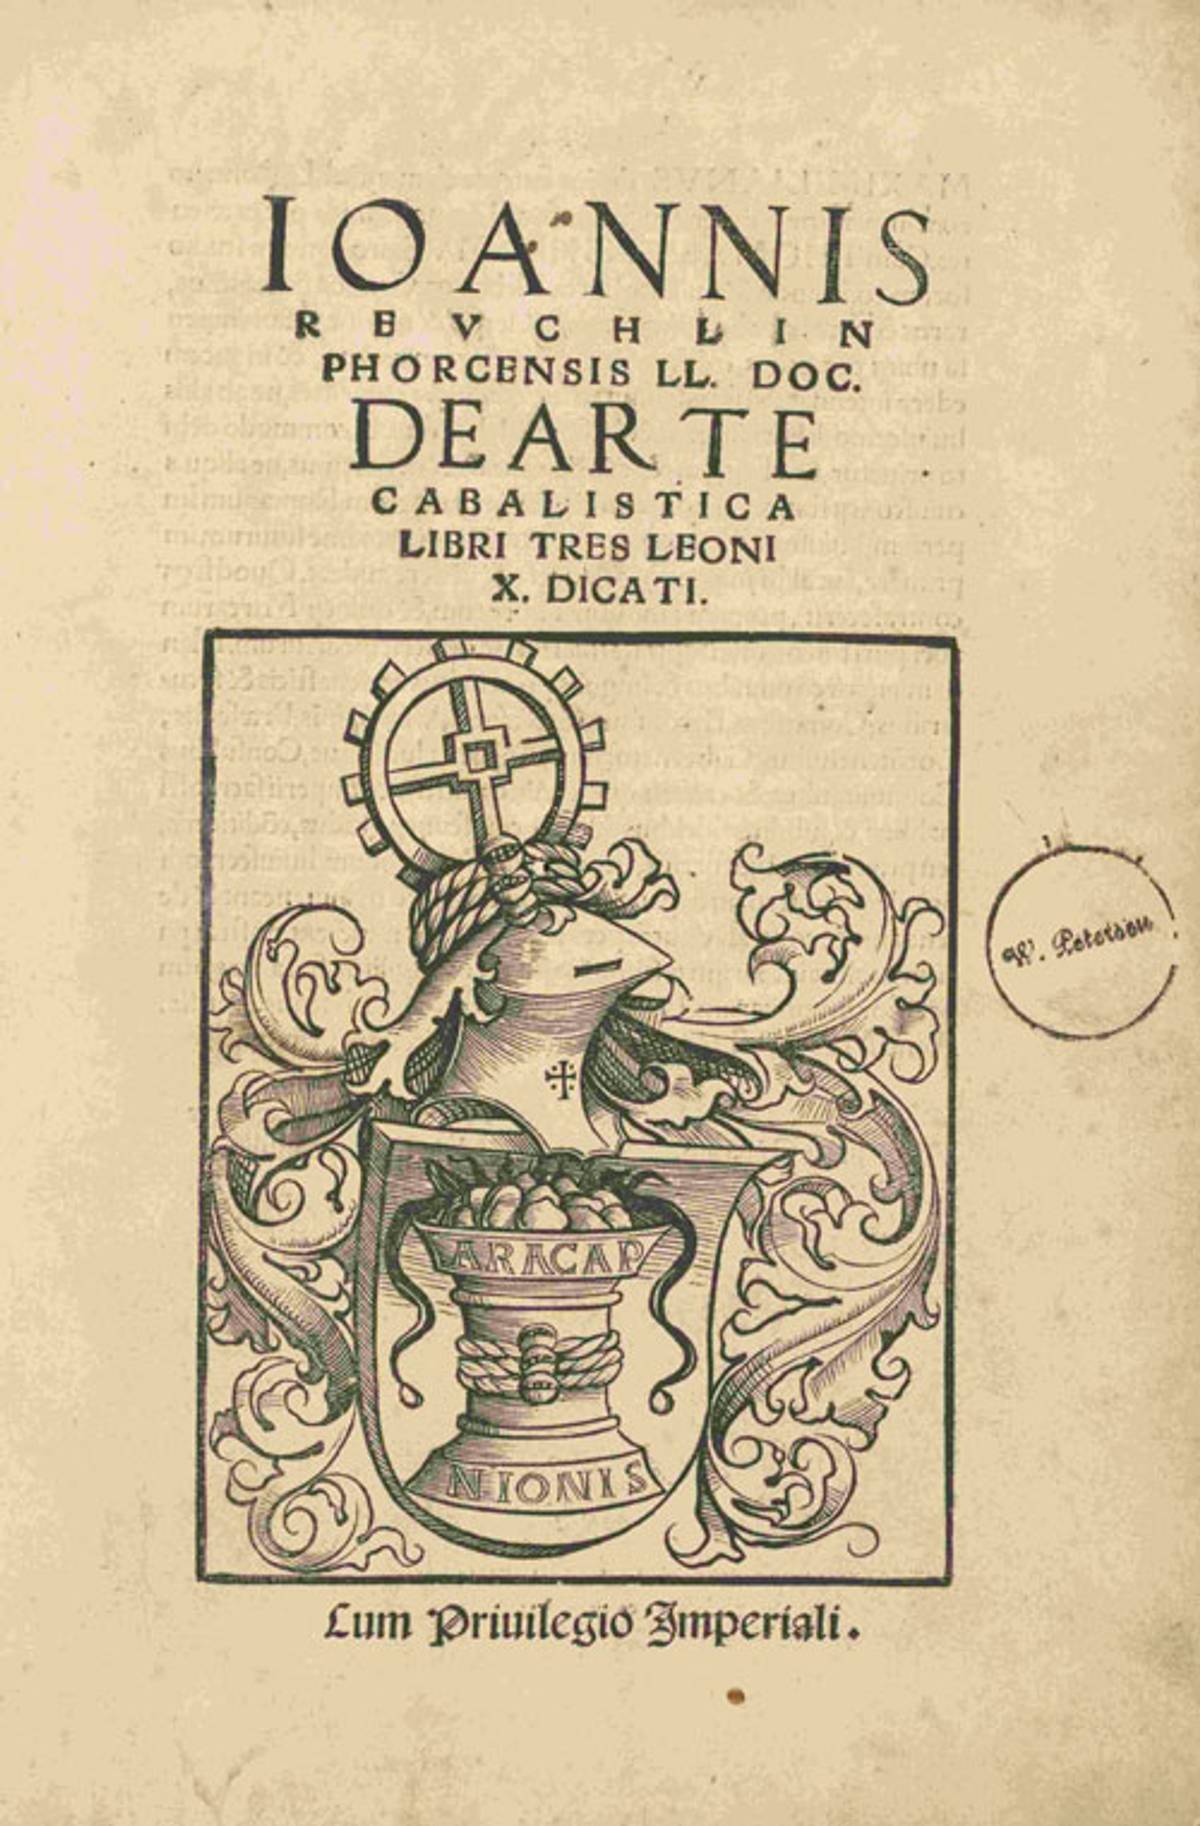 Title page of 'De arte cabalistica,' by Johann Reuchlin (1455-1522), 1517